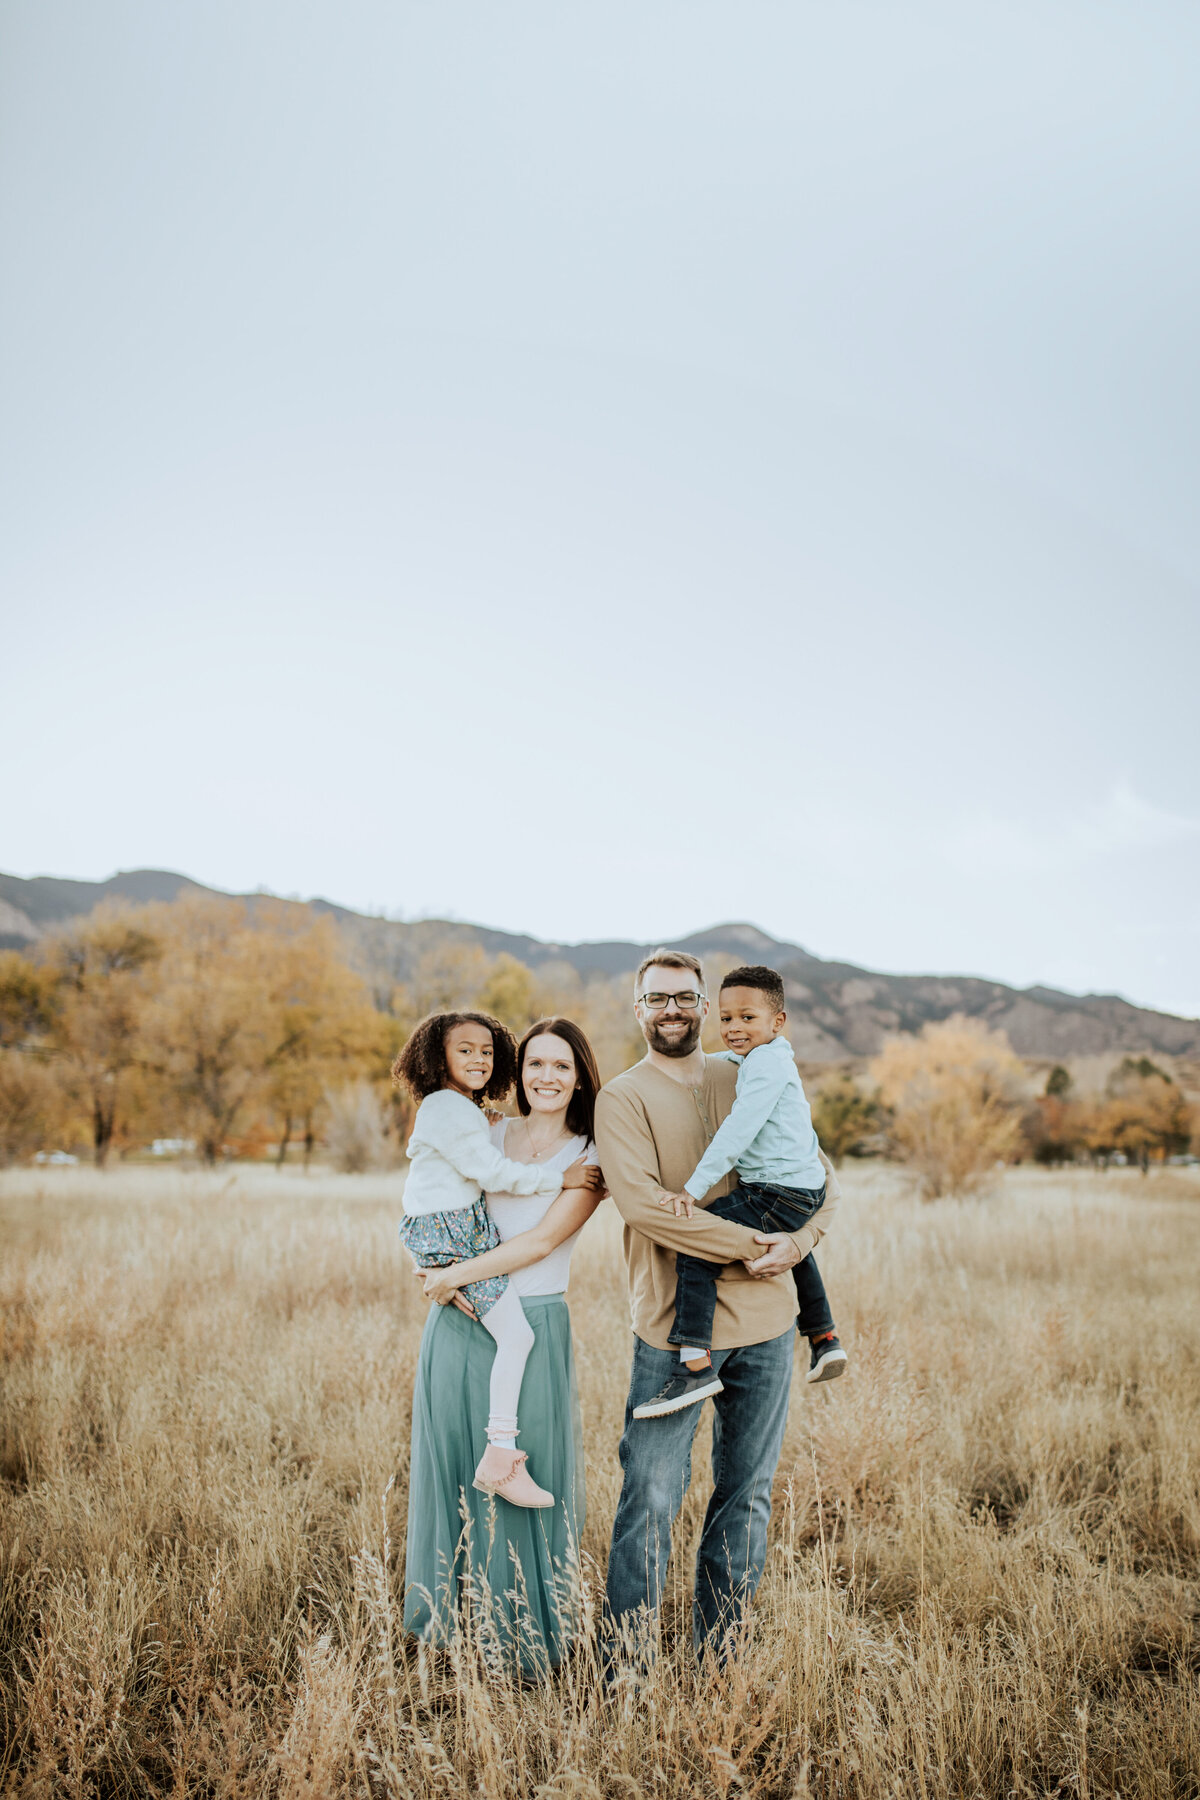 Best Colorado Springs Family Photographers - Emily Jo Photo17